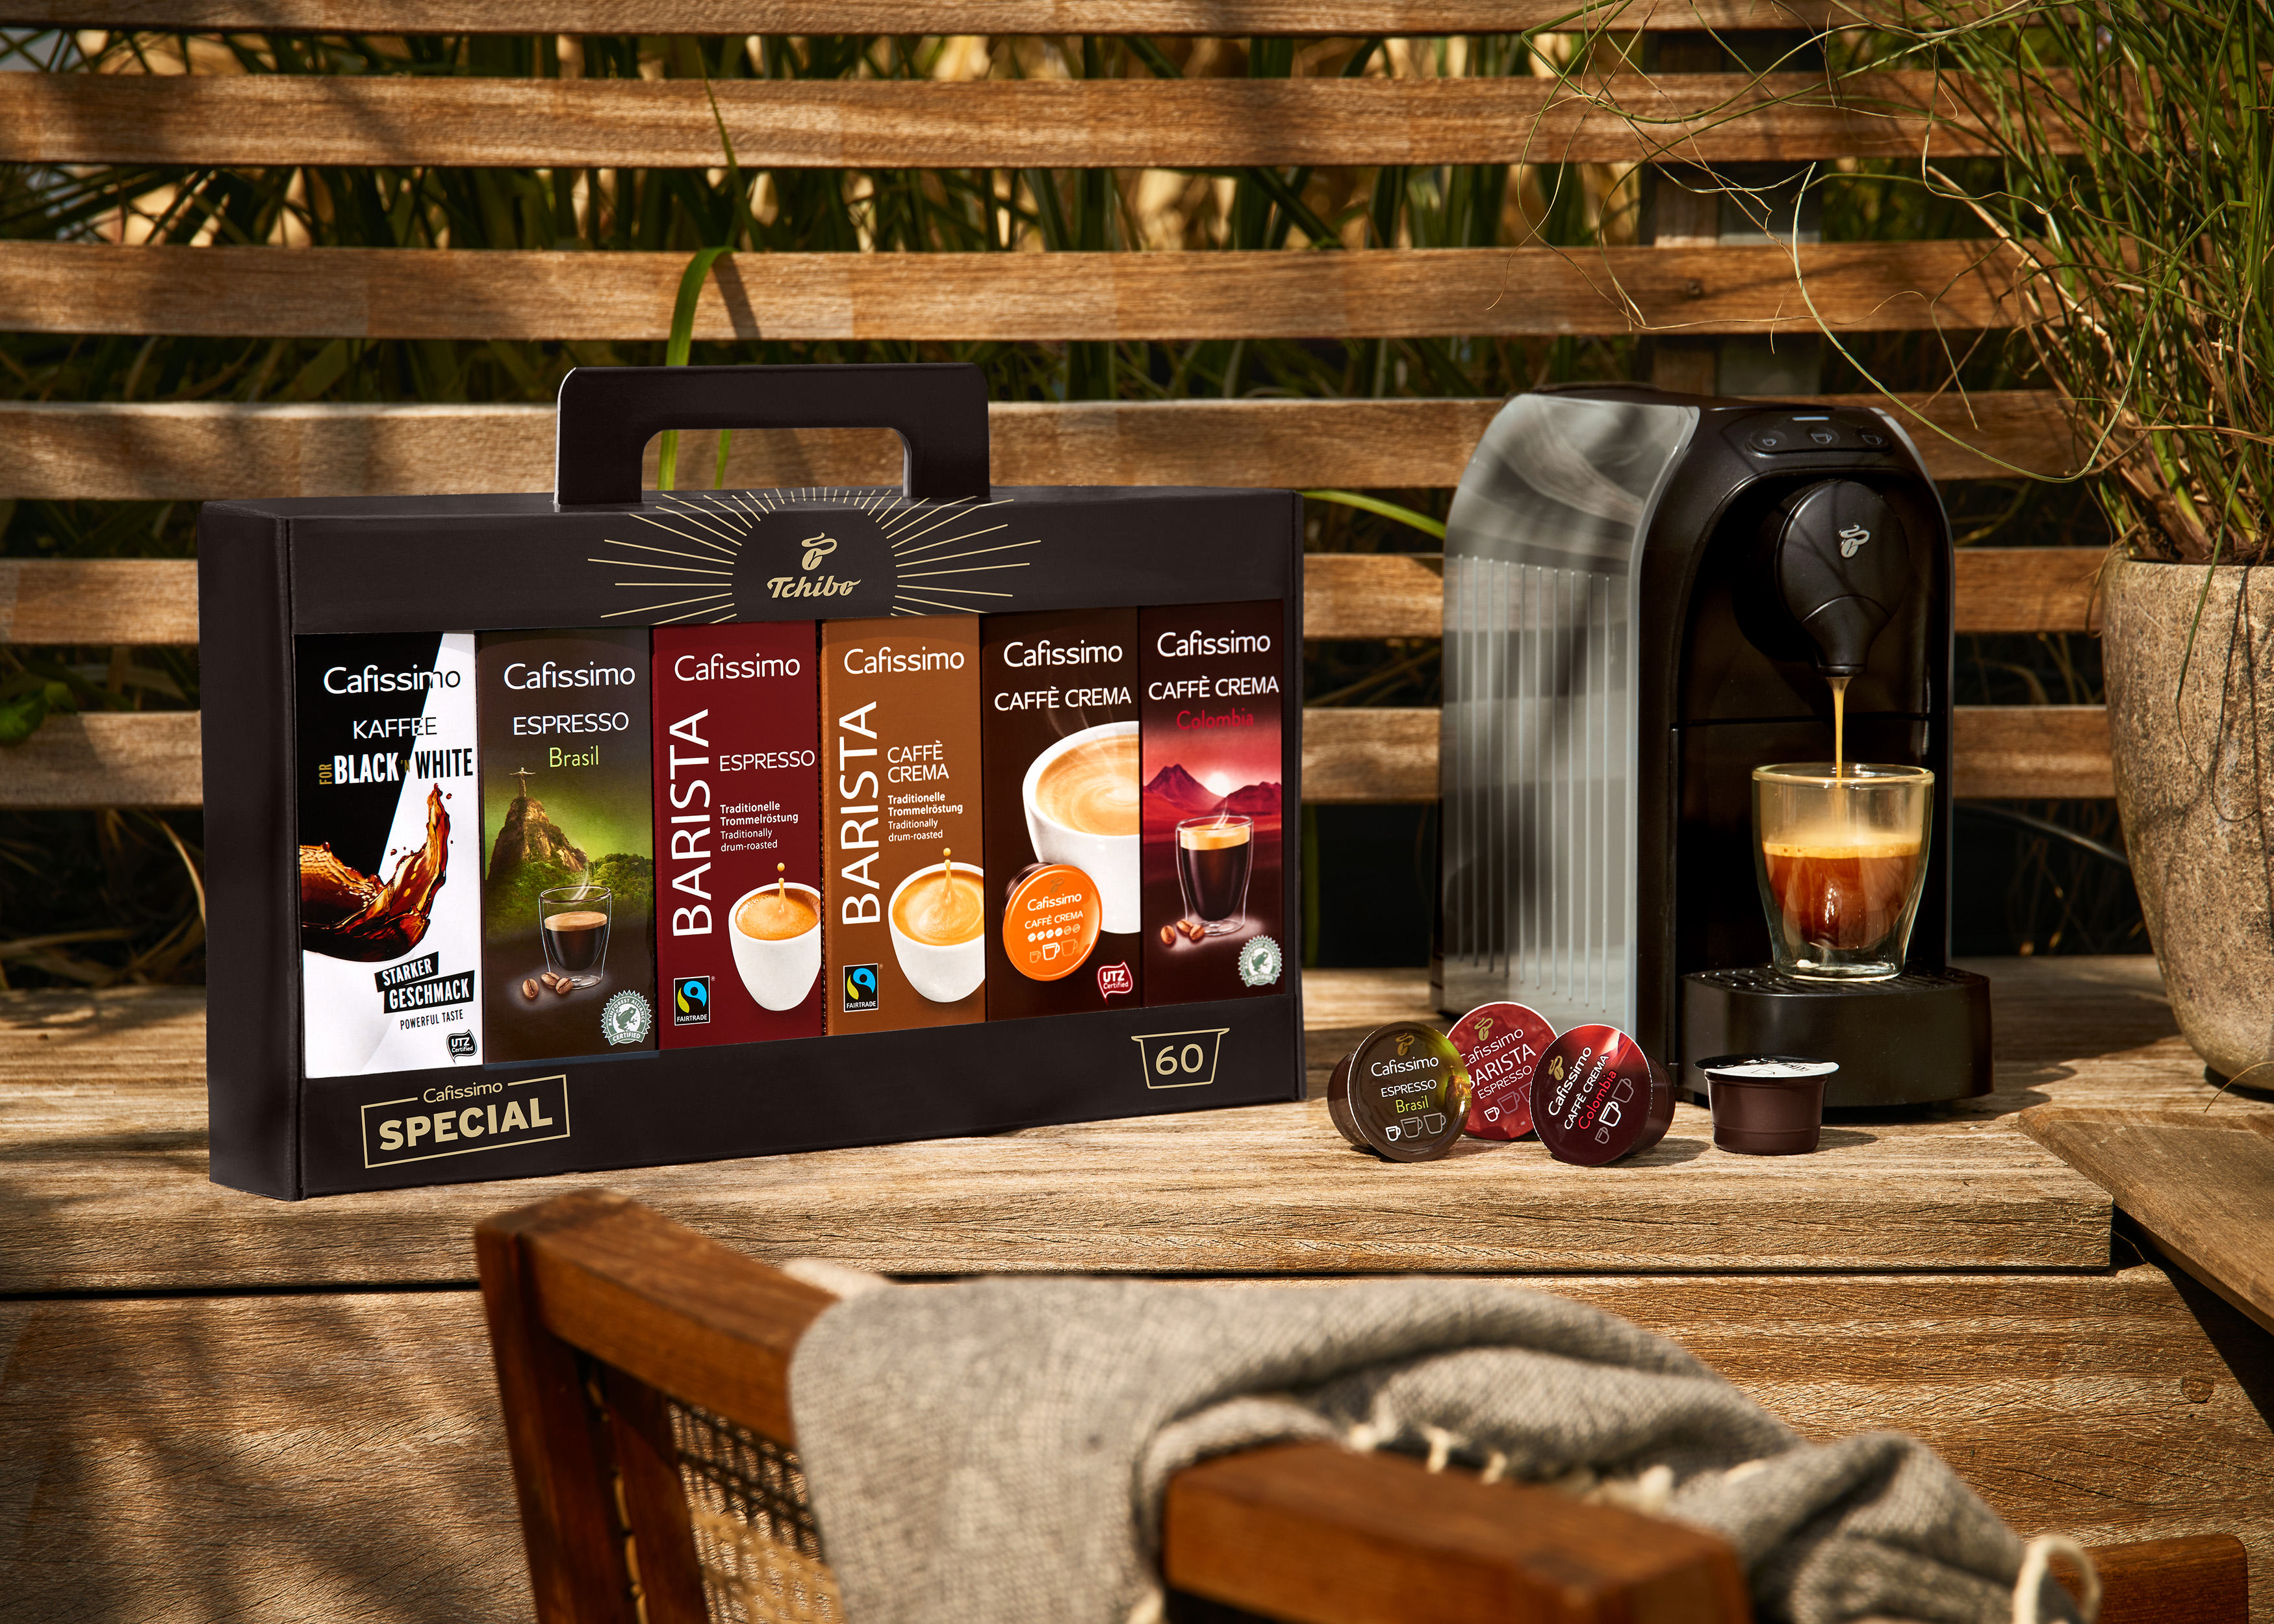 CAFISSIMO Filterkaffee Kaffeekapseln Braun und Caffè Kapsel-Vielfalts-Pack 60 Crema) (Espresso, TCHIBO